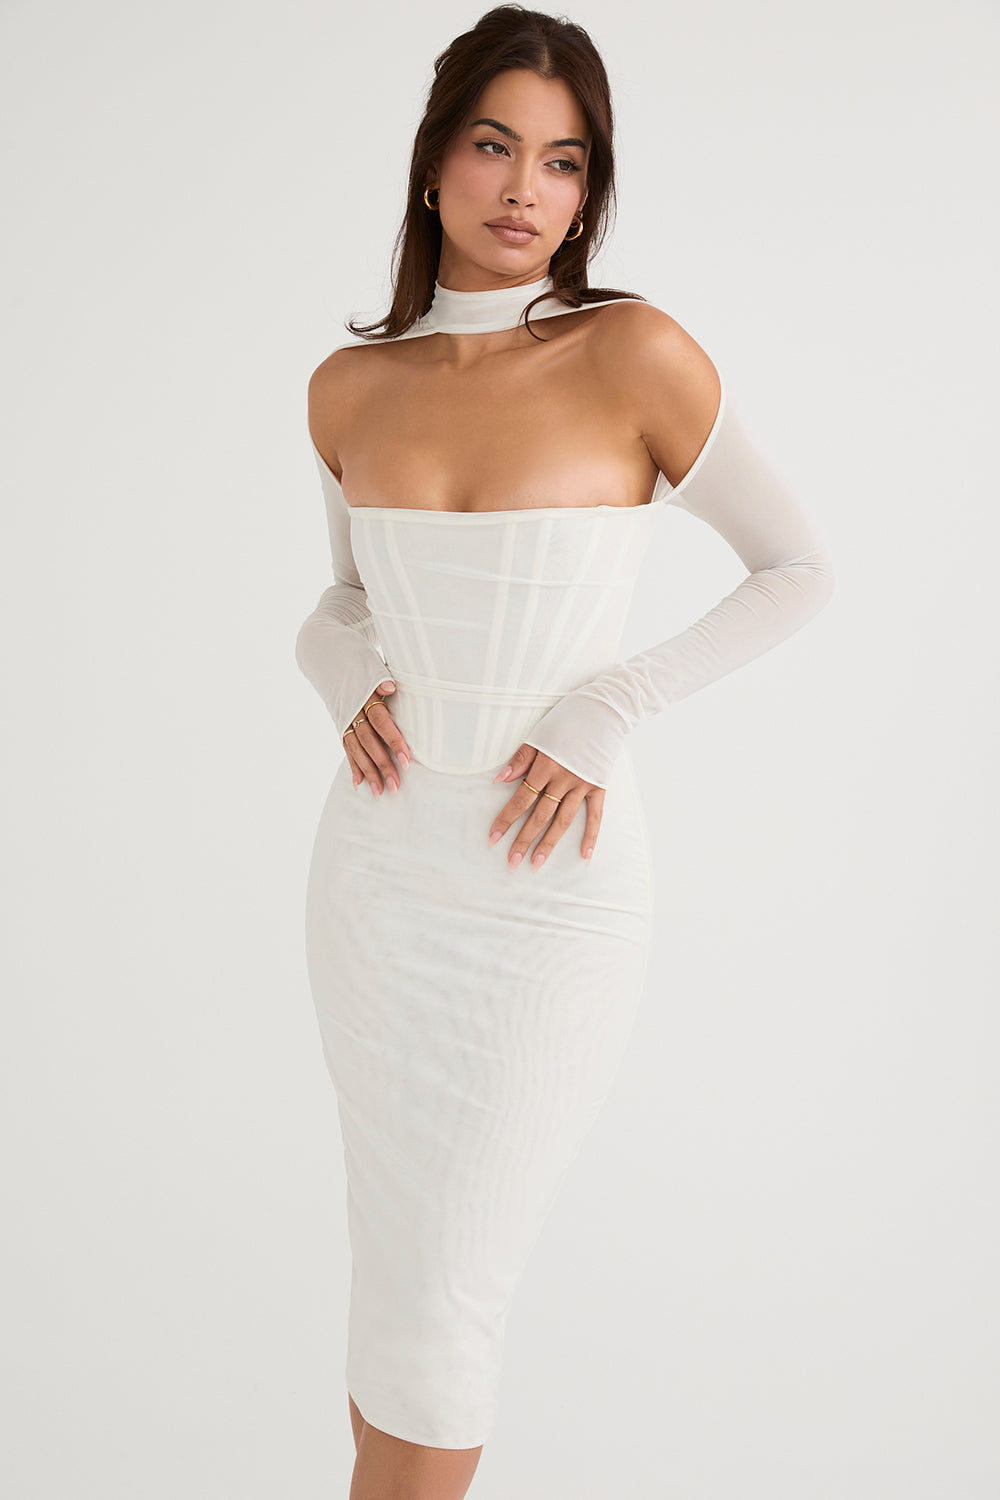 Vestido Midi Espartilho De Malha Branca Dominique - Nova Feminina